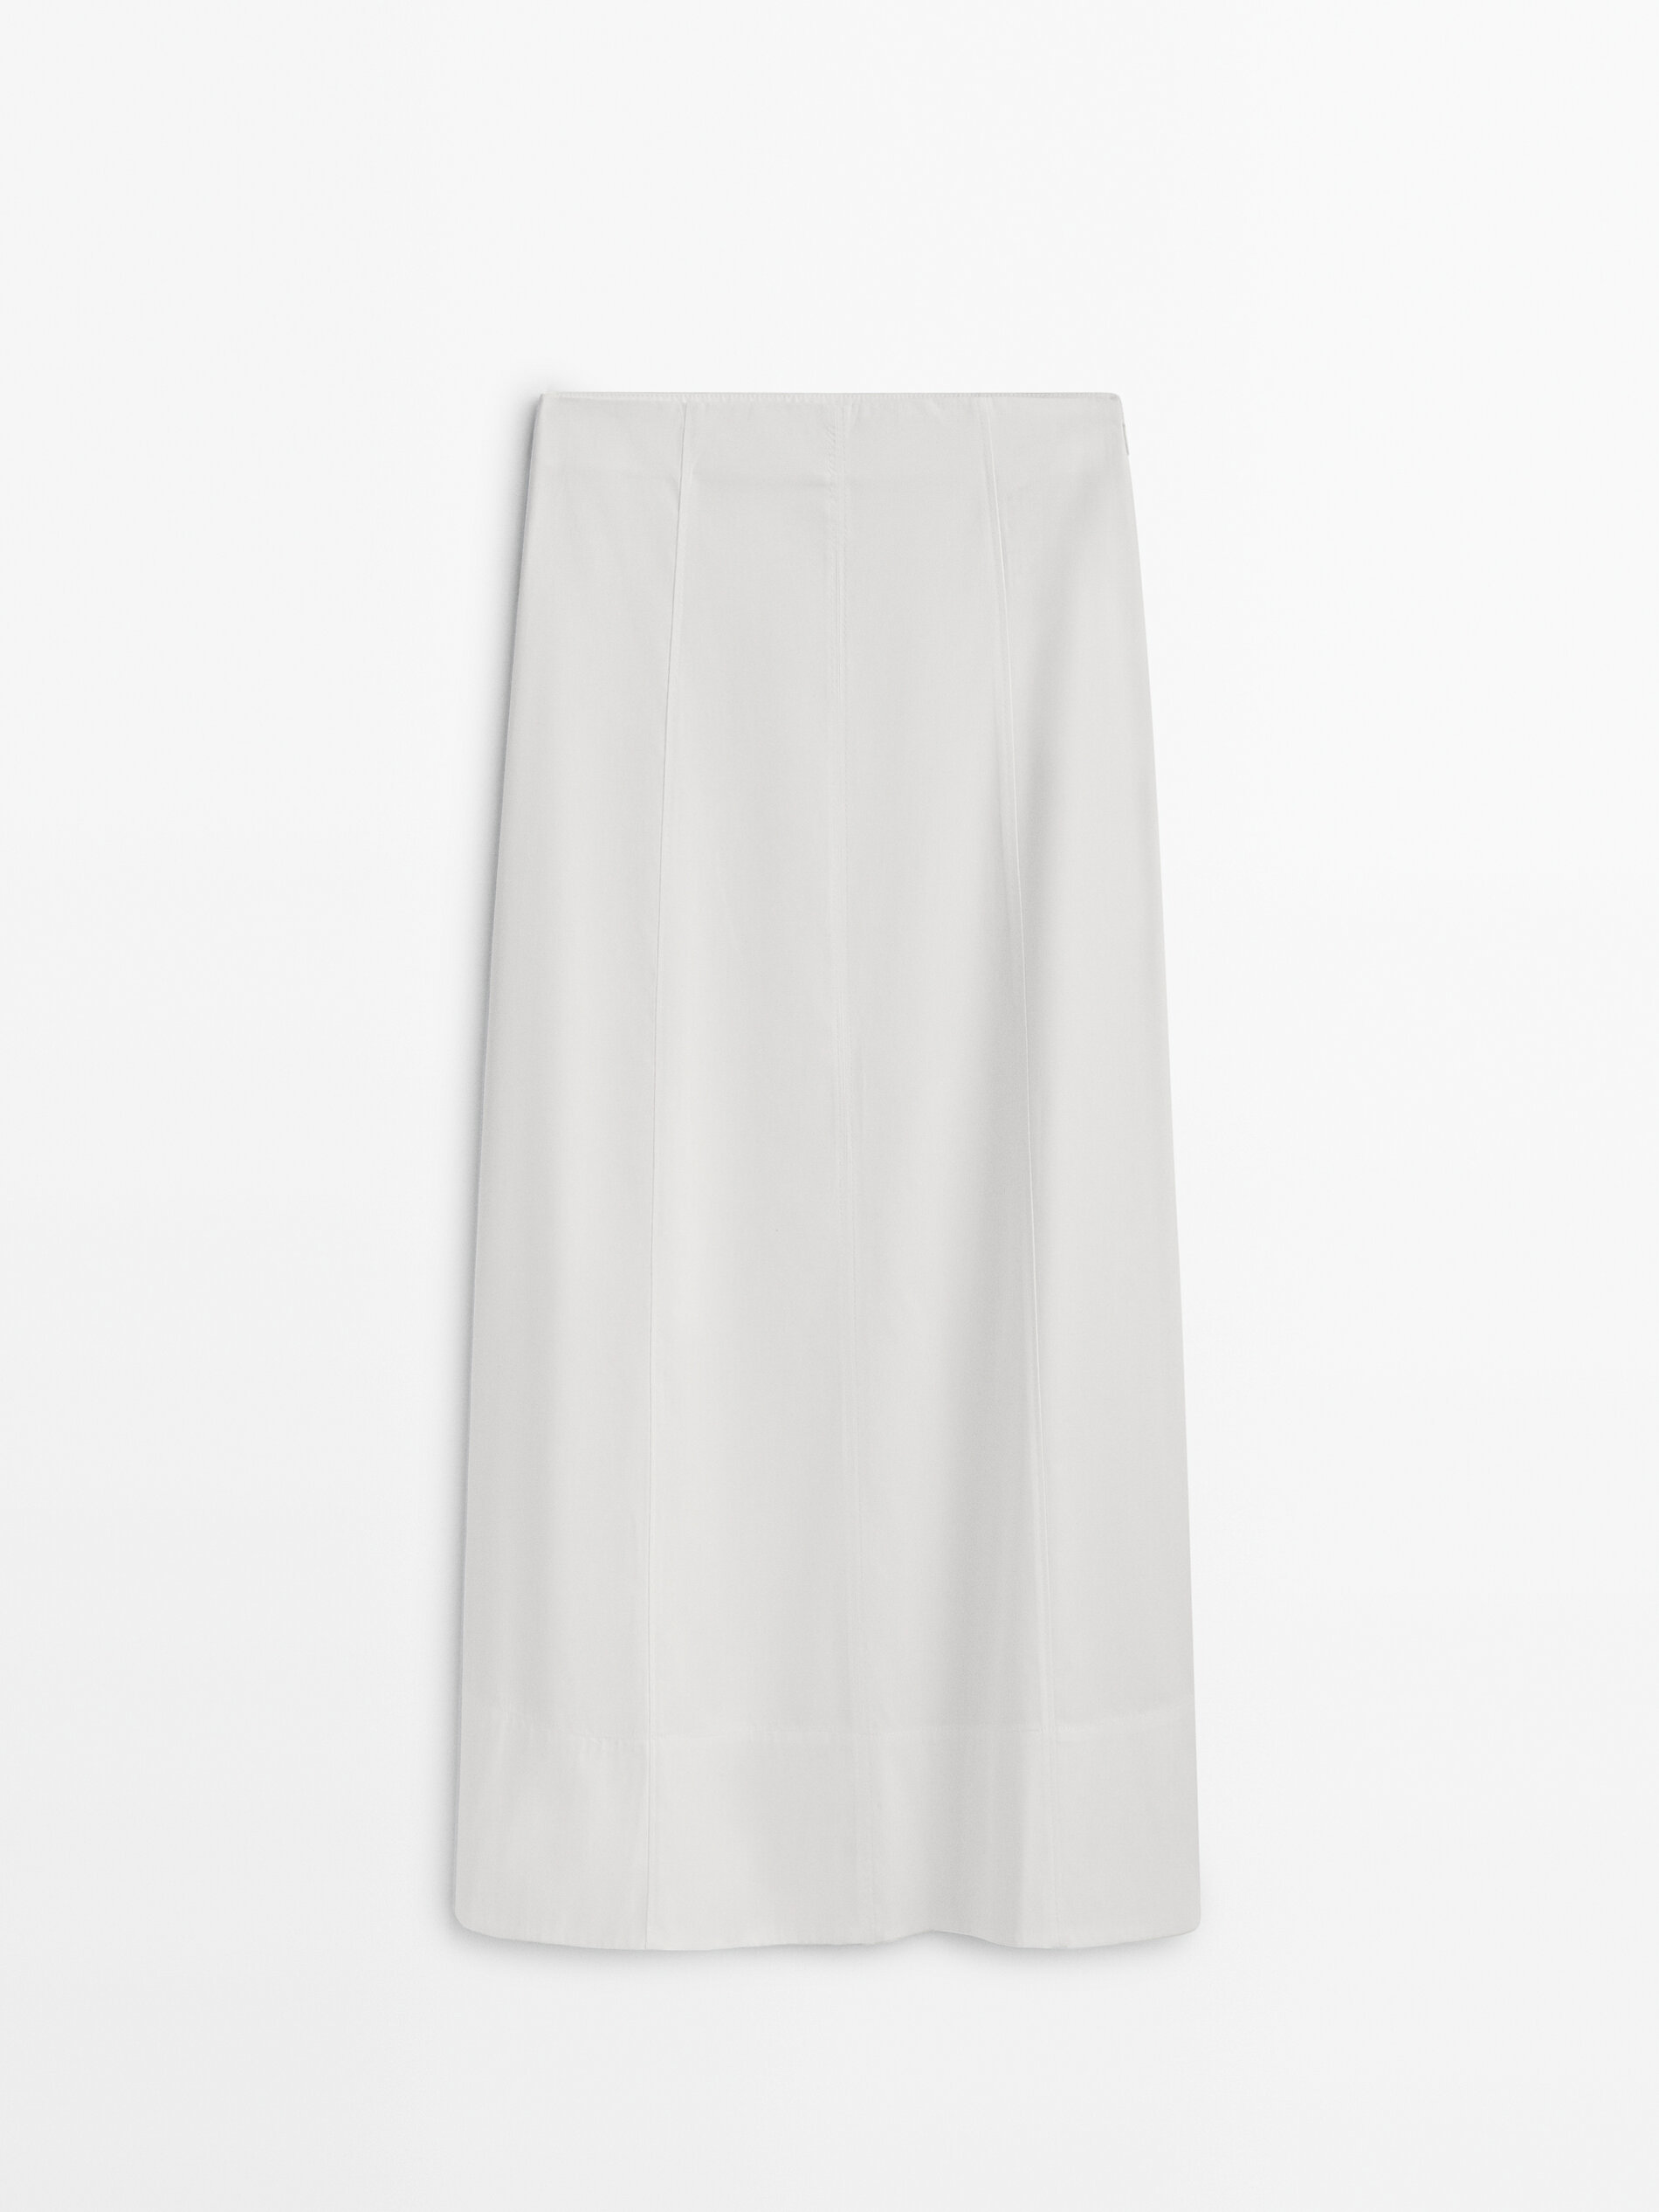 ALT: Estas son las 9 faldas de Massimo Dutti ms fciles de combinar esta primavera verano